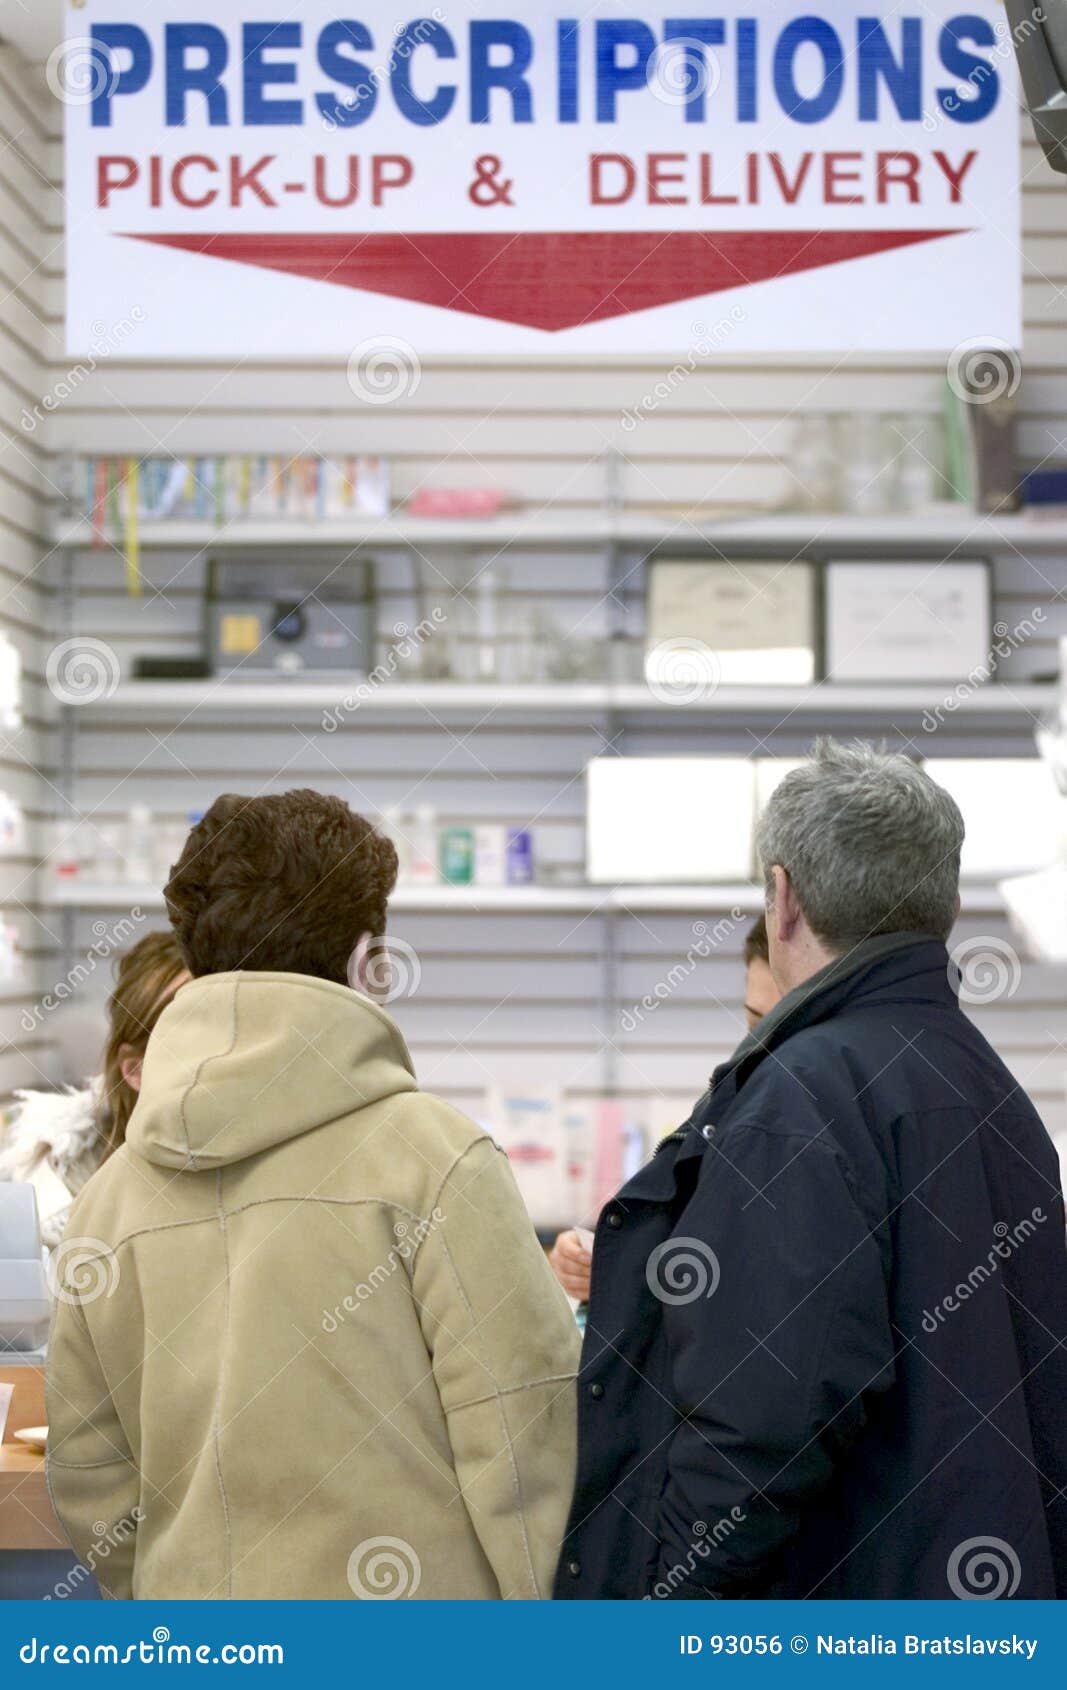 pharmacy pick-up area